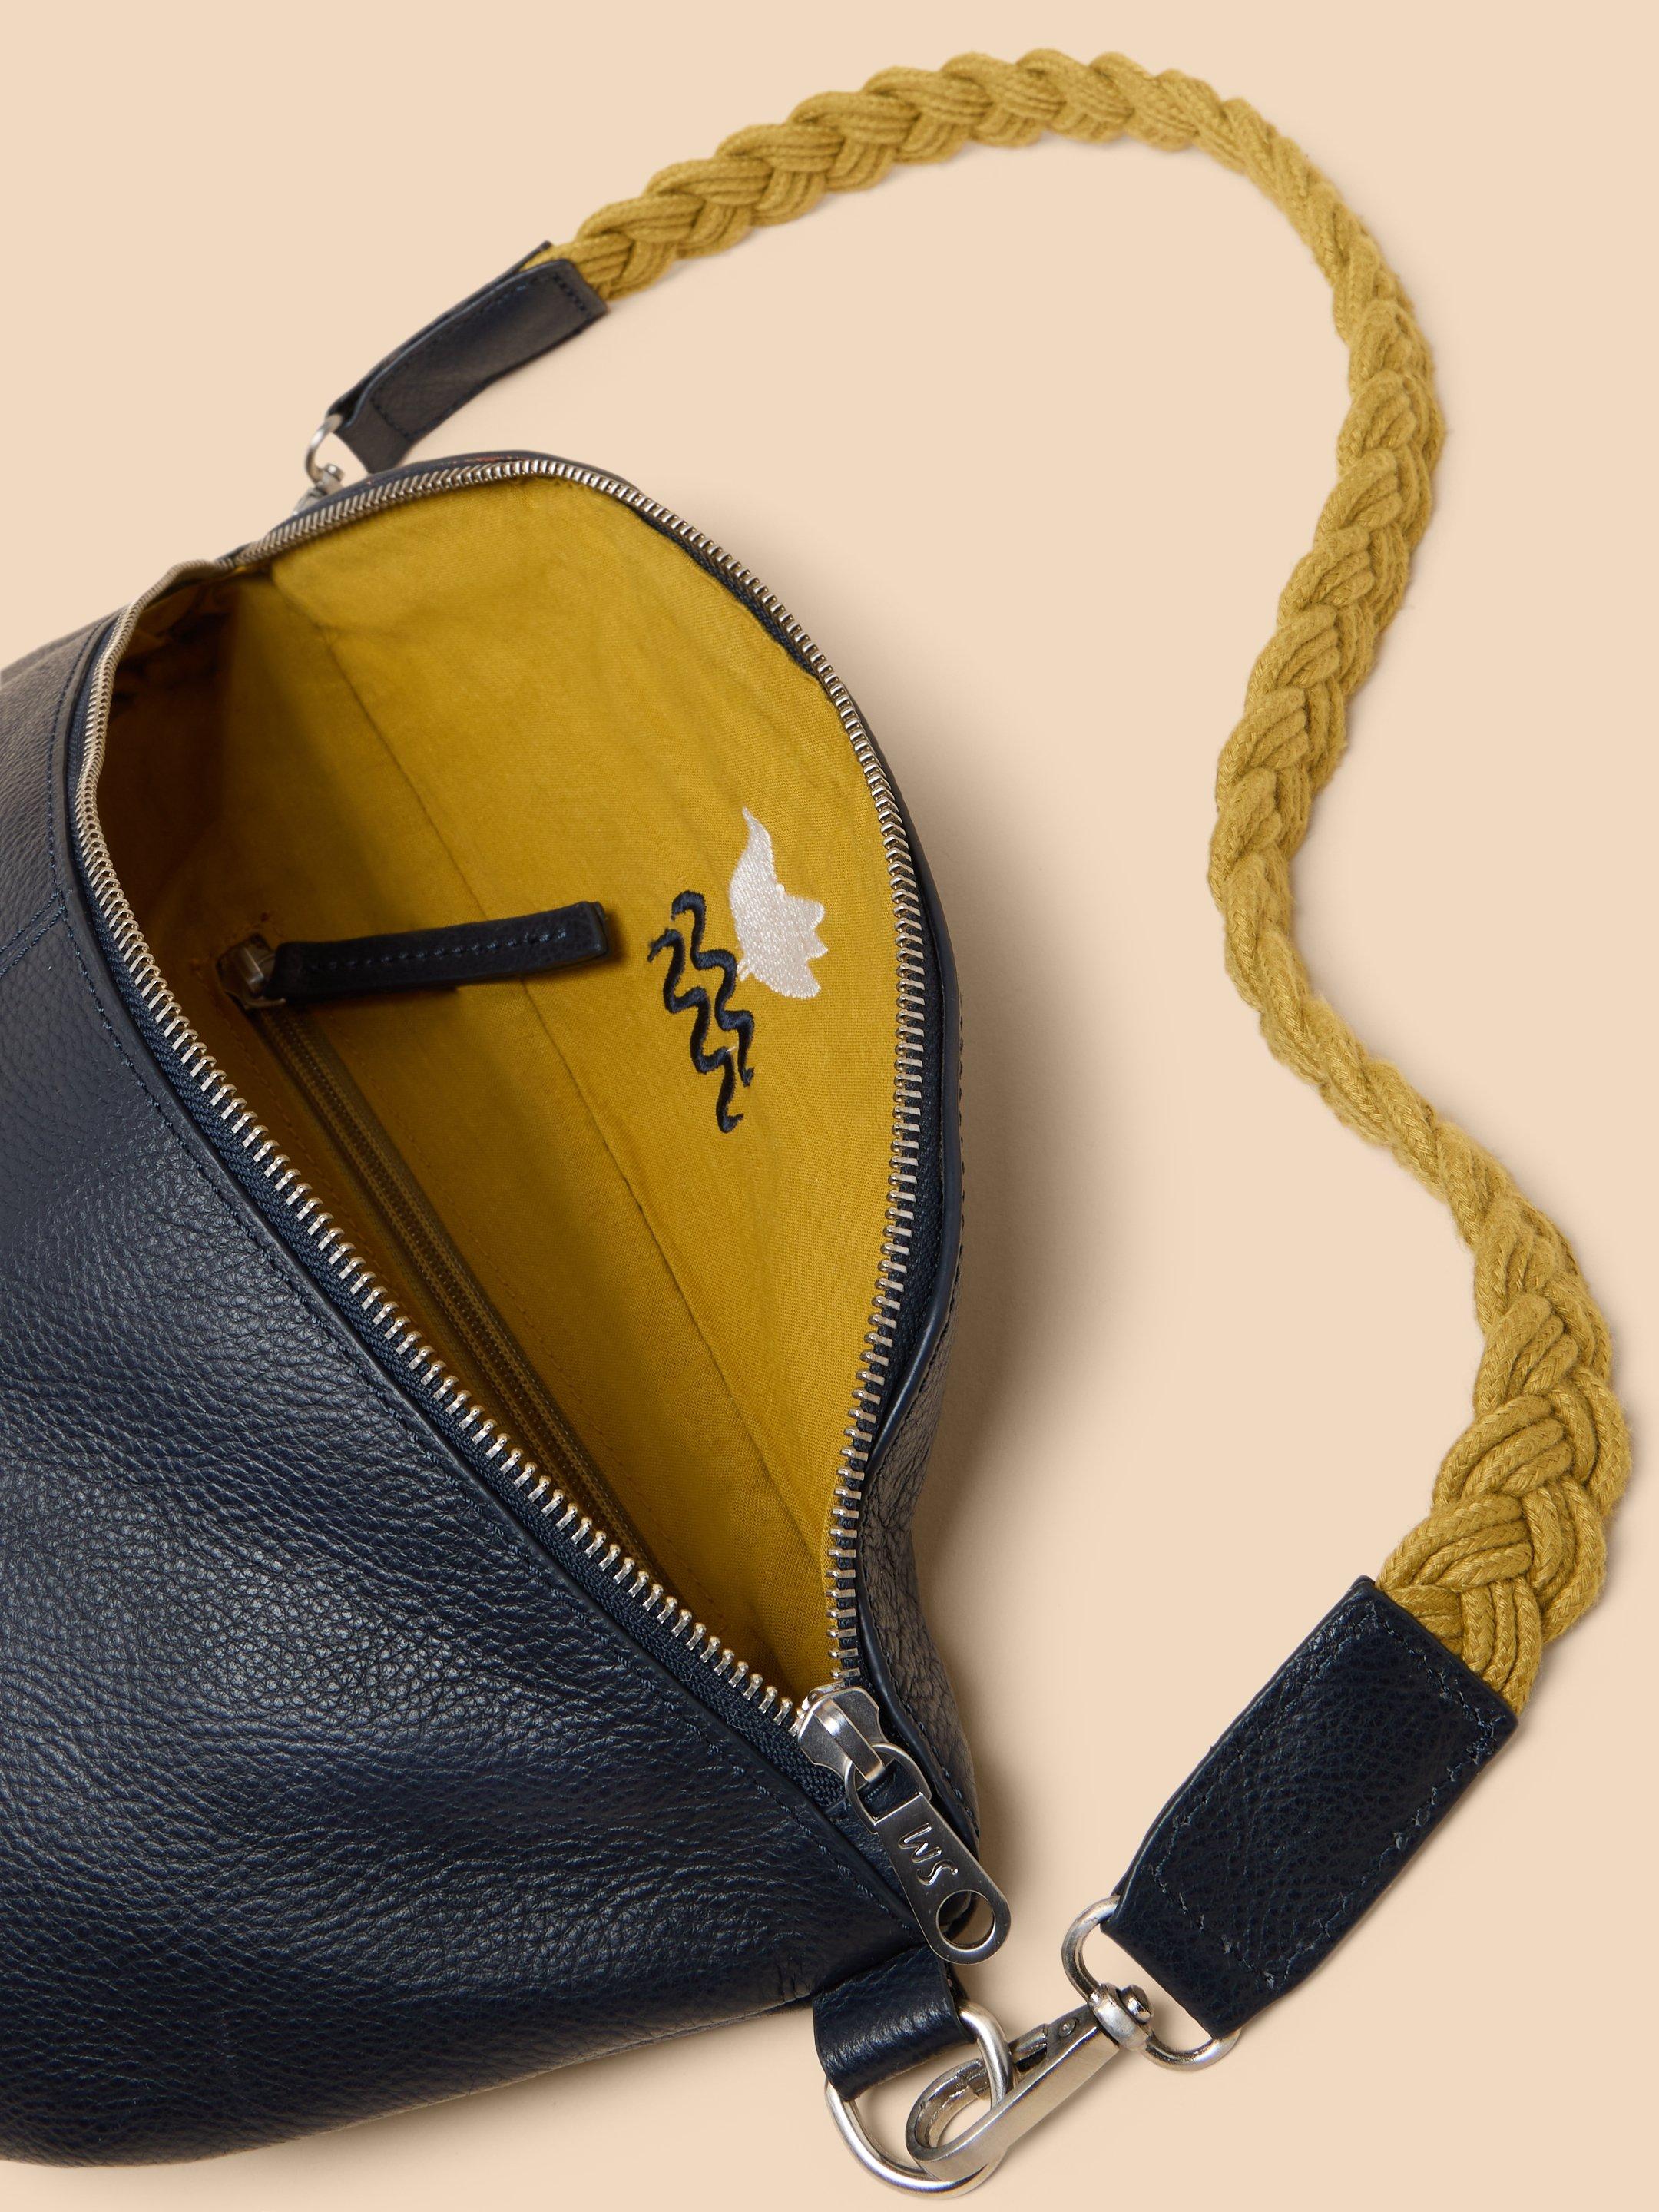 Sebby Leather Sling Bag in DARK NAVY - MODEL DETAIL